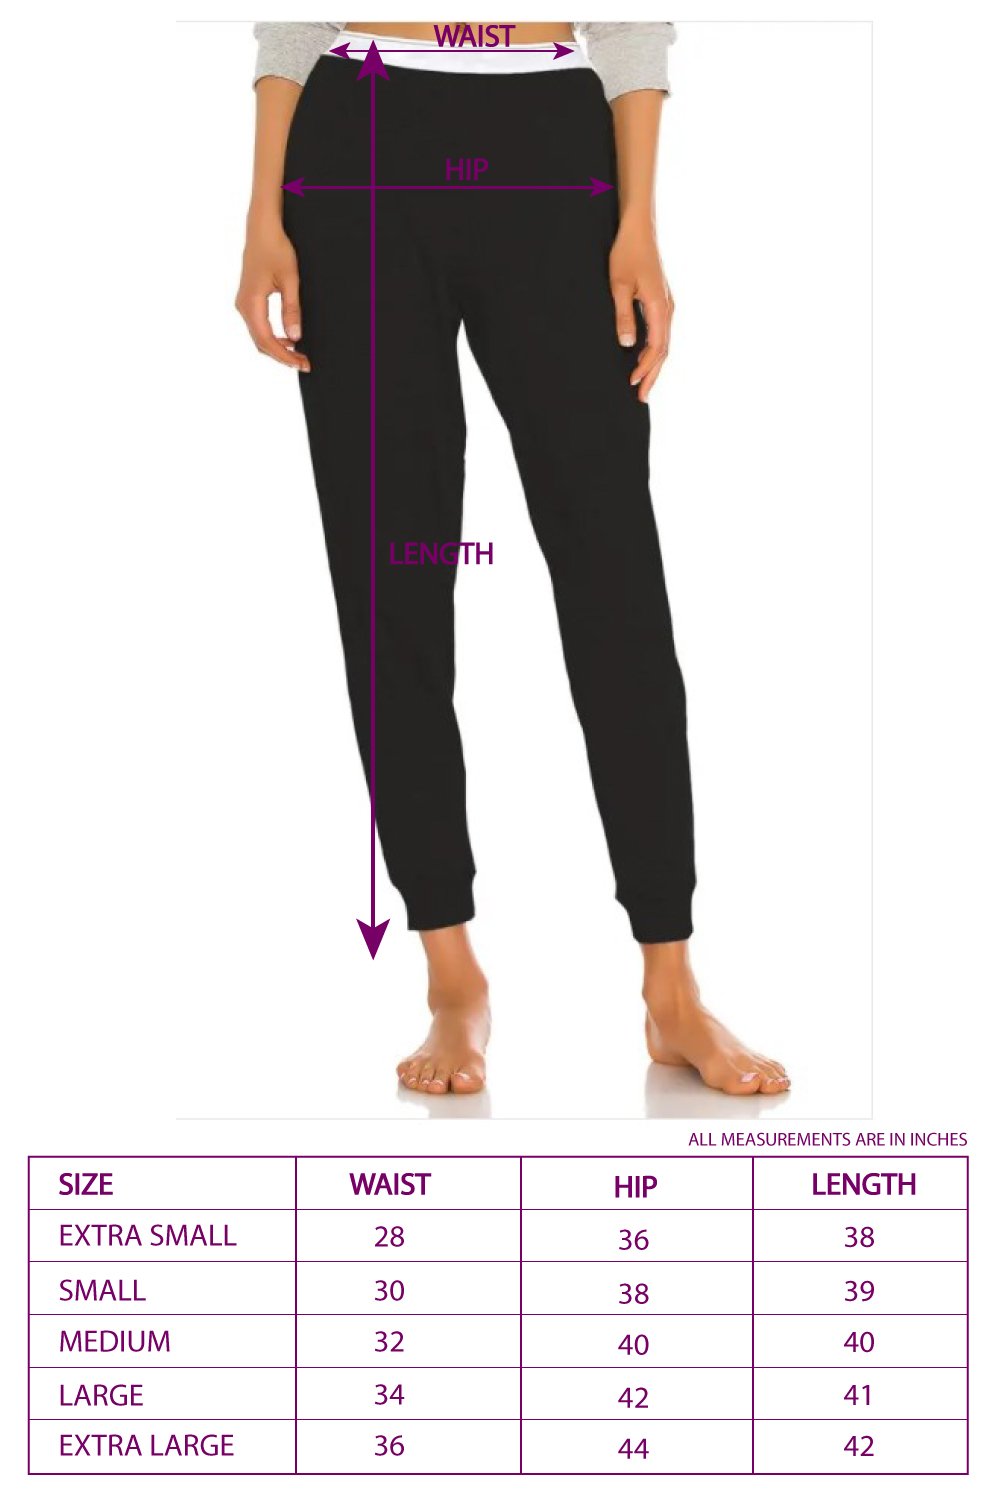 Seawhisper Leggings for Women Plus Size Black Yoga Workout Leggings XL 14W  Thick at Amazon Women's Clothing store